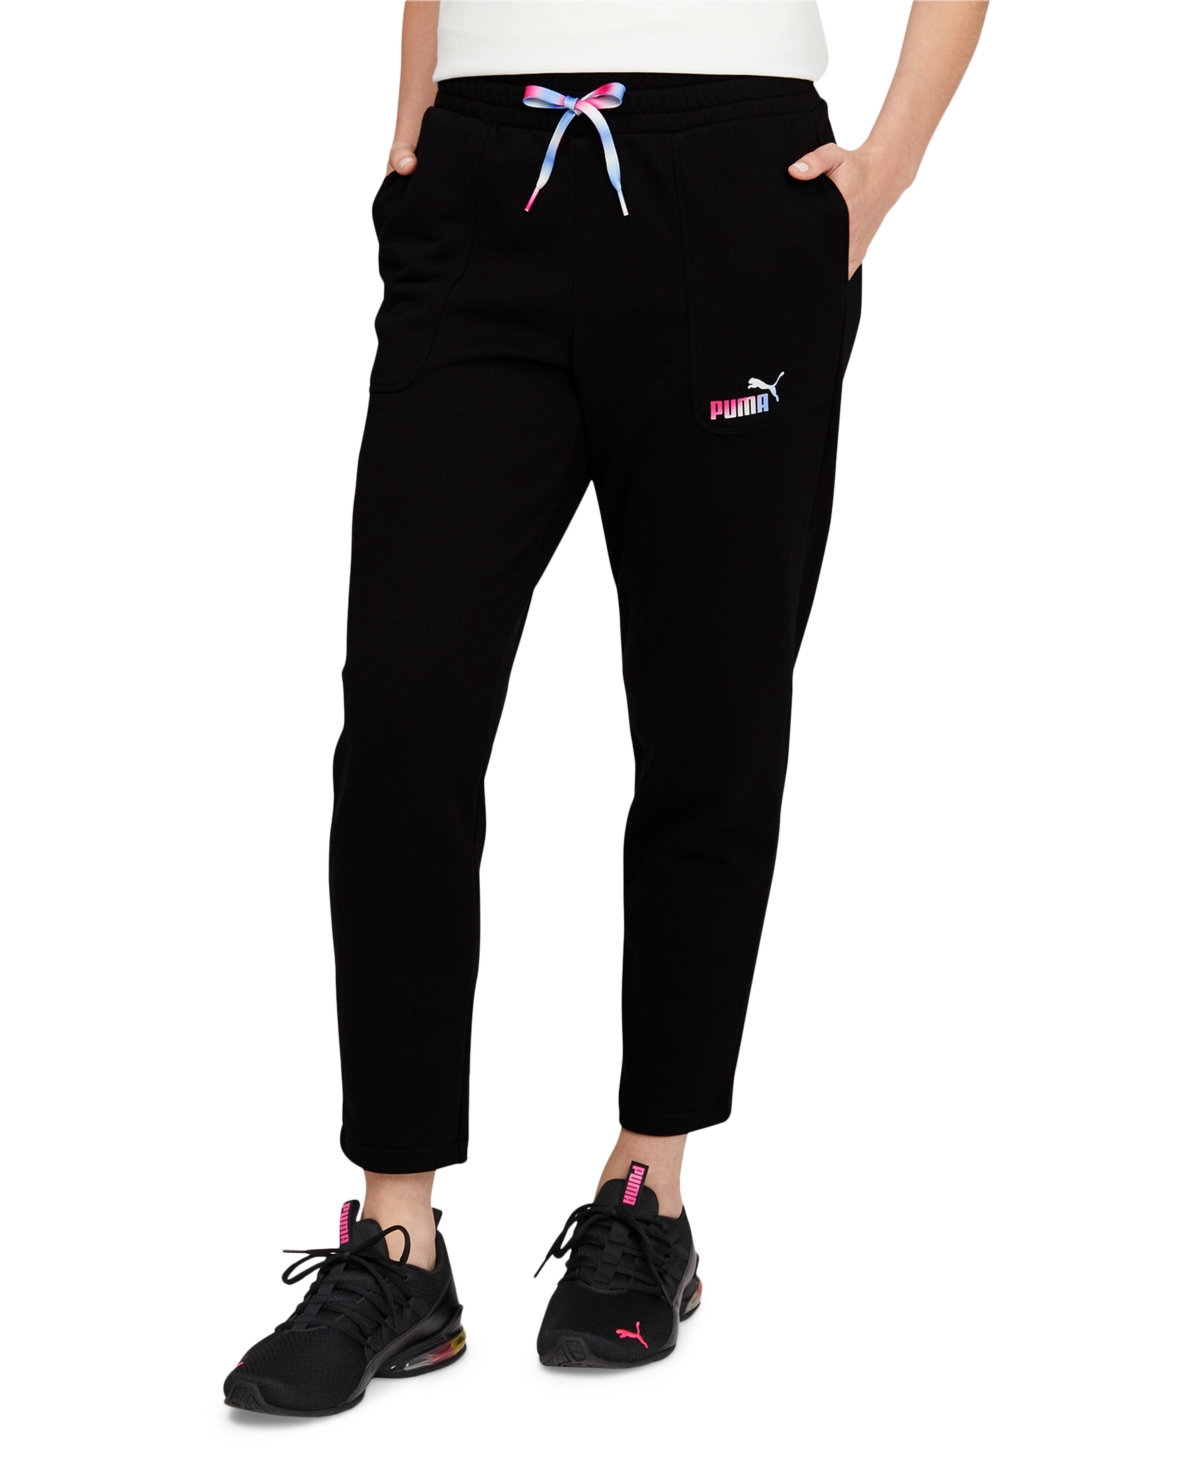 Women's Elevated Ess Ombre Pants - Puma Black